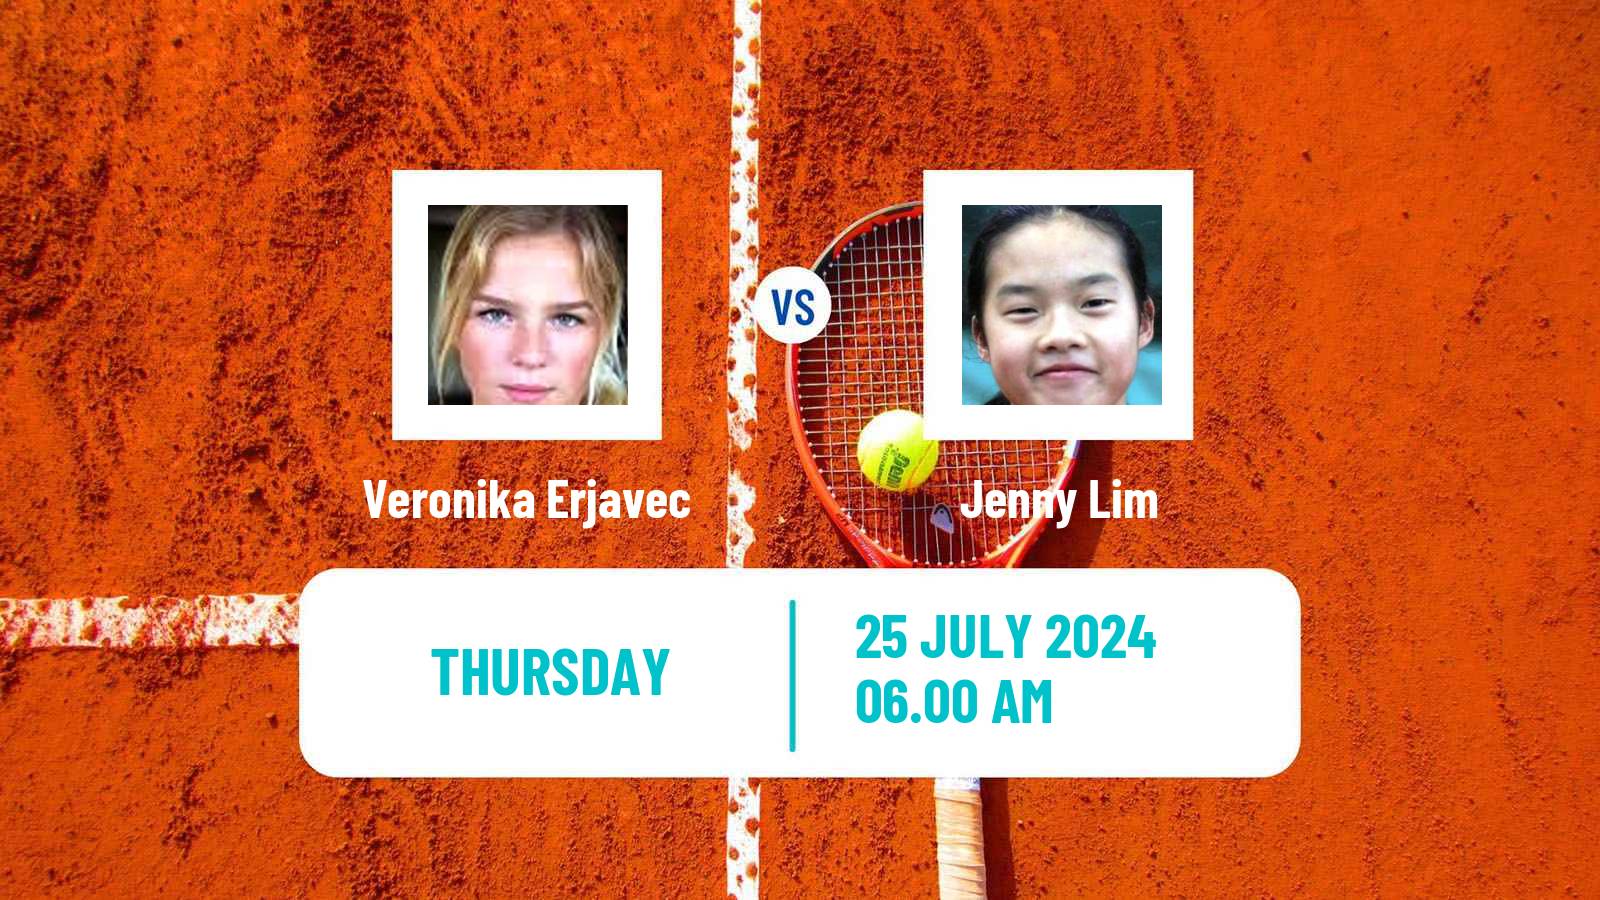 Tennis ITF W35 Horb Women Veronika Erjavec - Jenny Lim